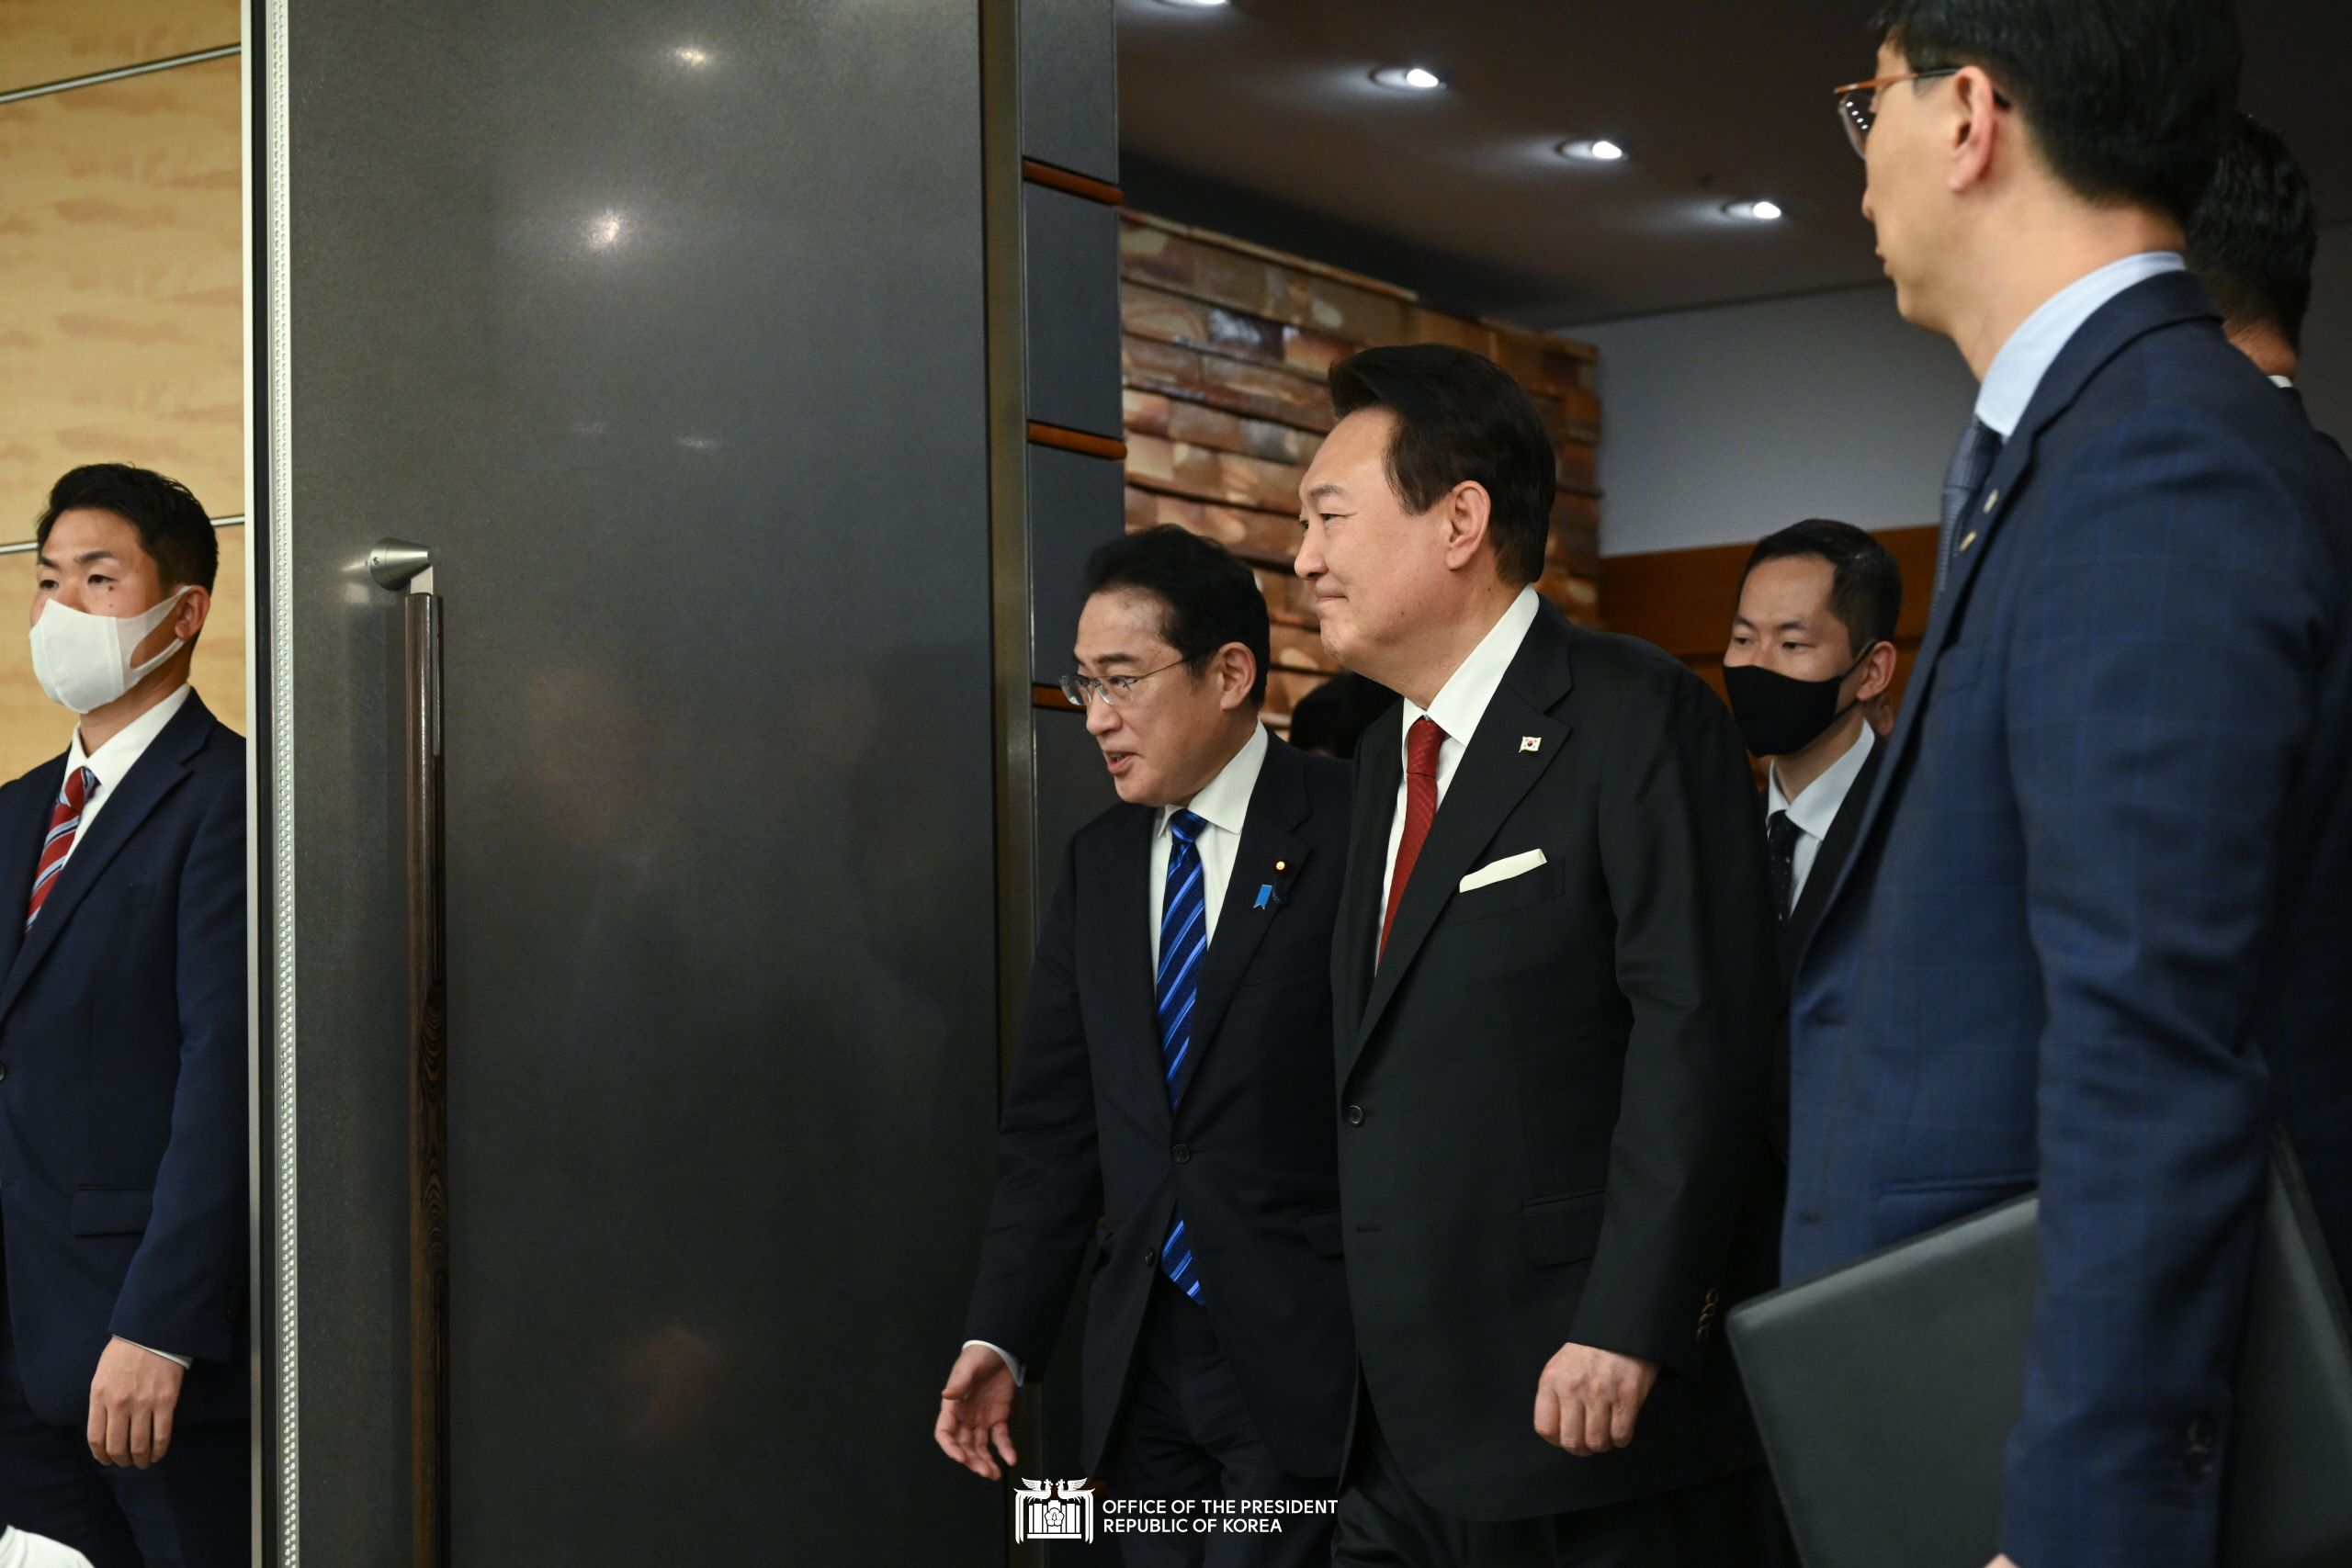 Attending the extended Korea-Japan summit in Tokyo, Japan slide 1